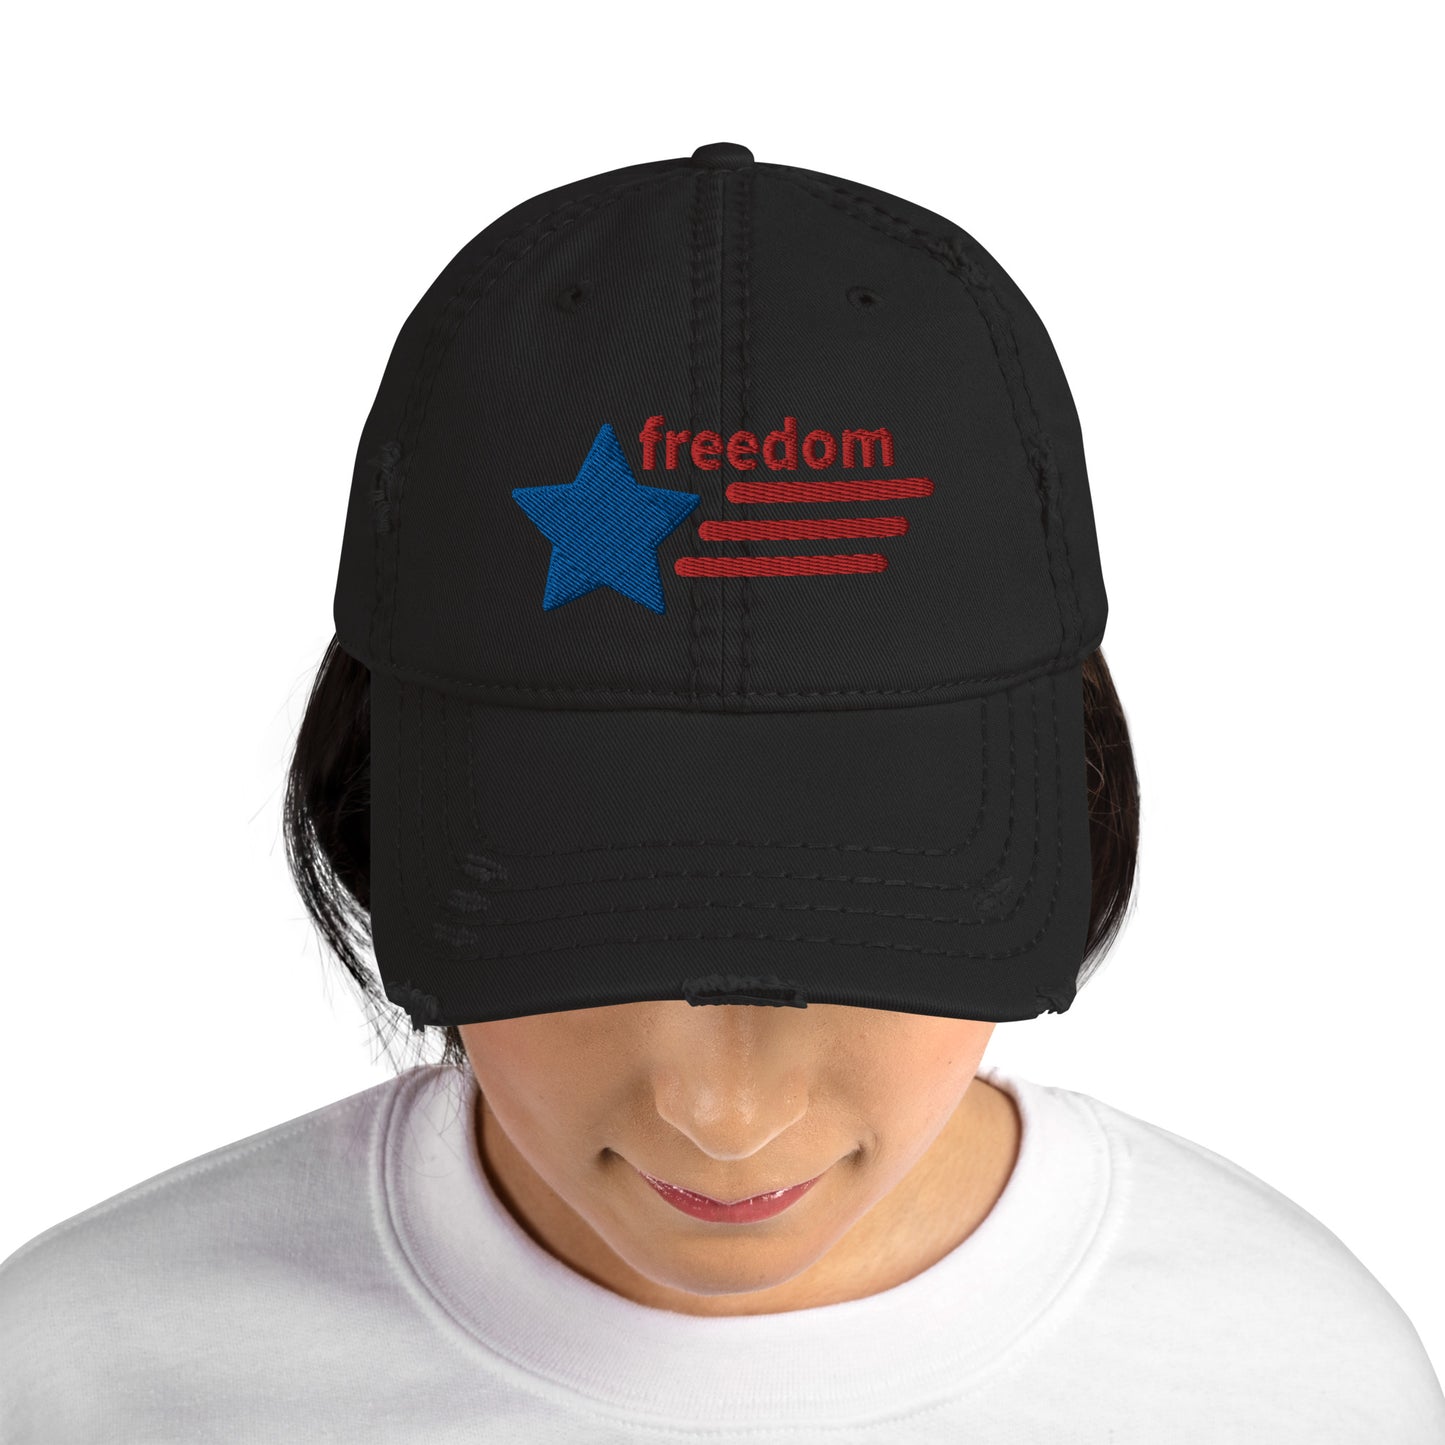 Freedom America Distressed Dad Hat